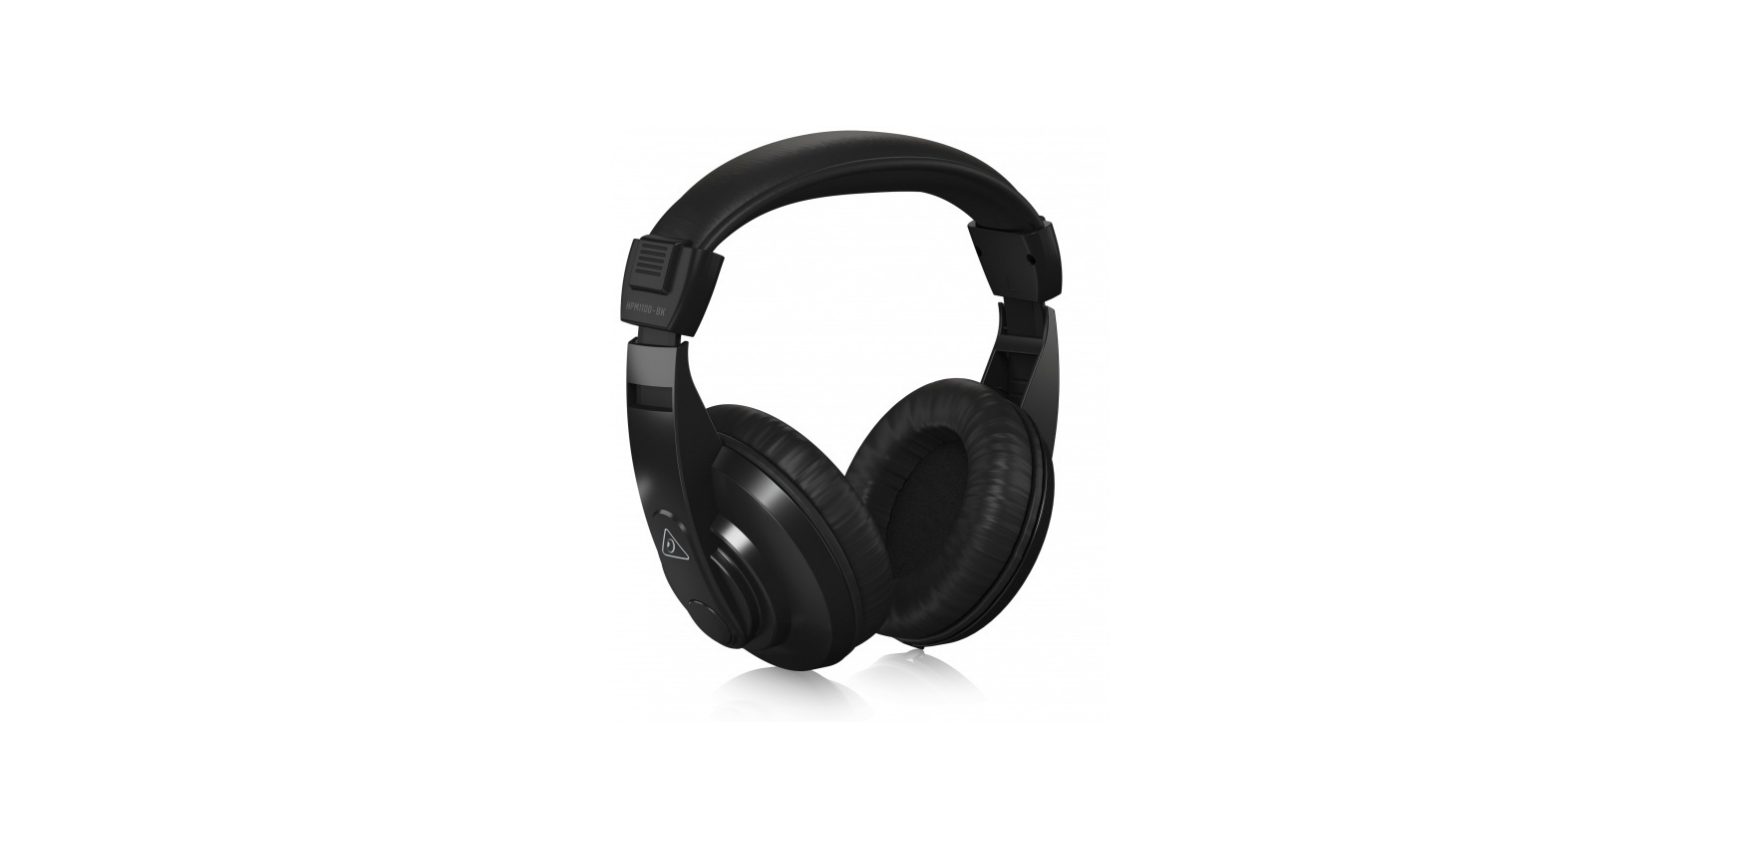 HPM1100 / HPM1100-BK Multi-Purpose Headphones